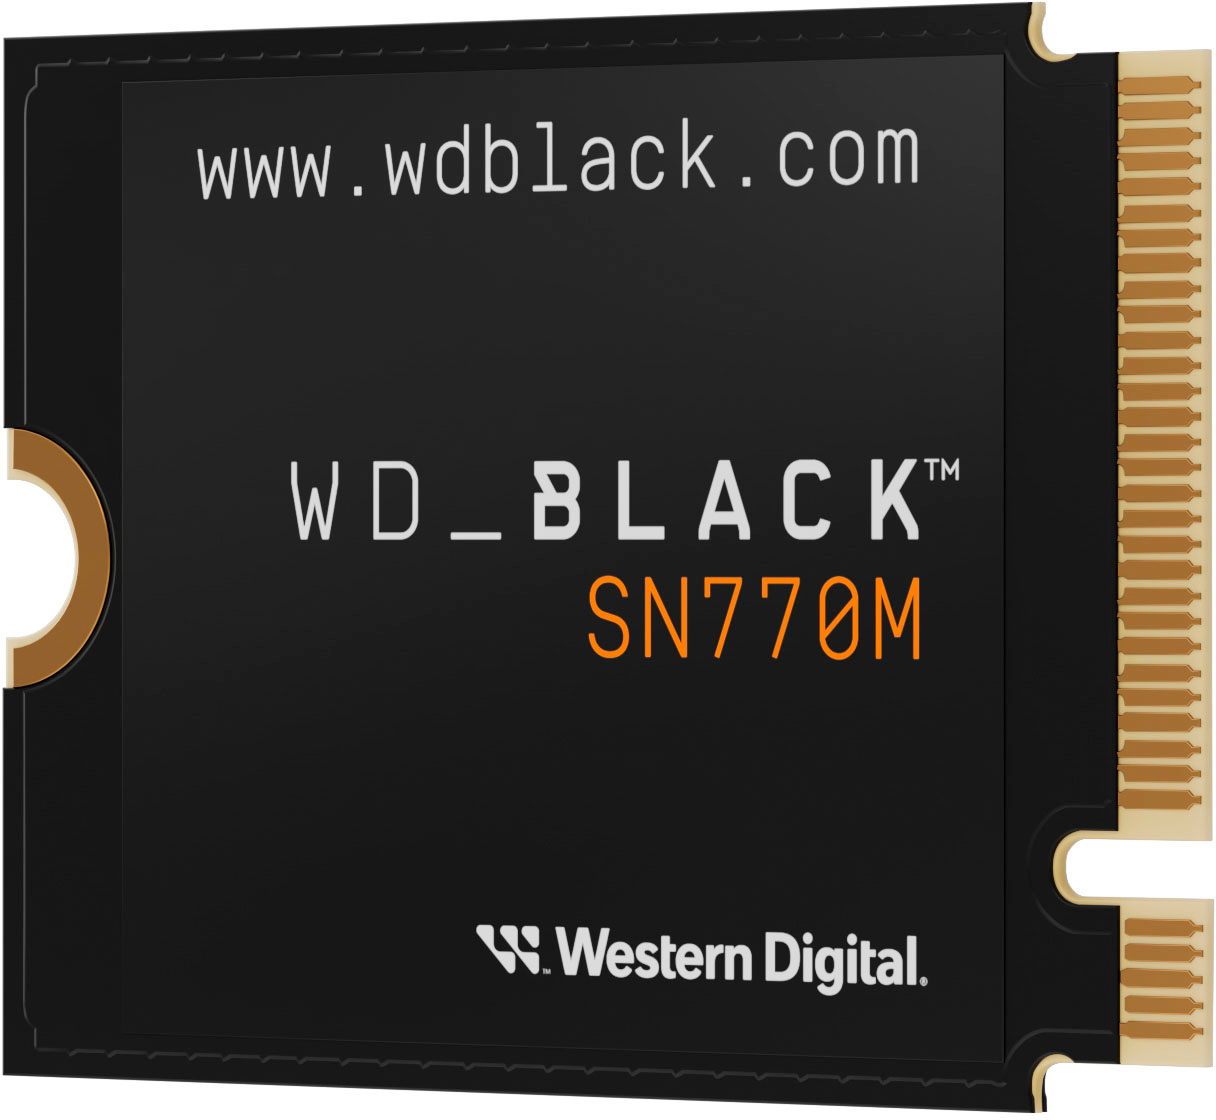 WD BLACK SN770M 1TB Internal SSD PCIe Gen 4 x4 M.2 2230 for ROG